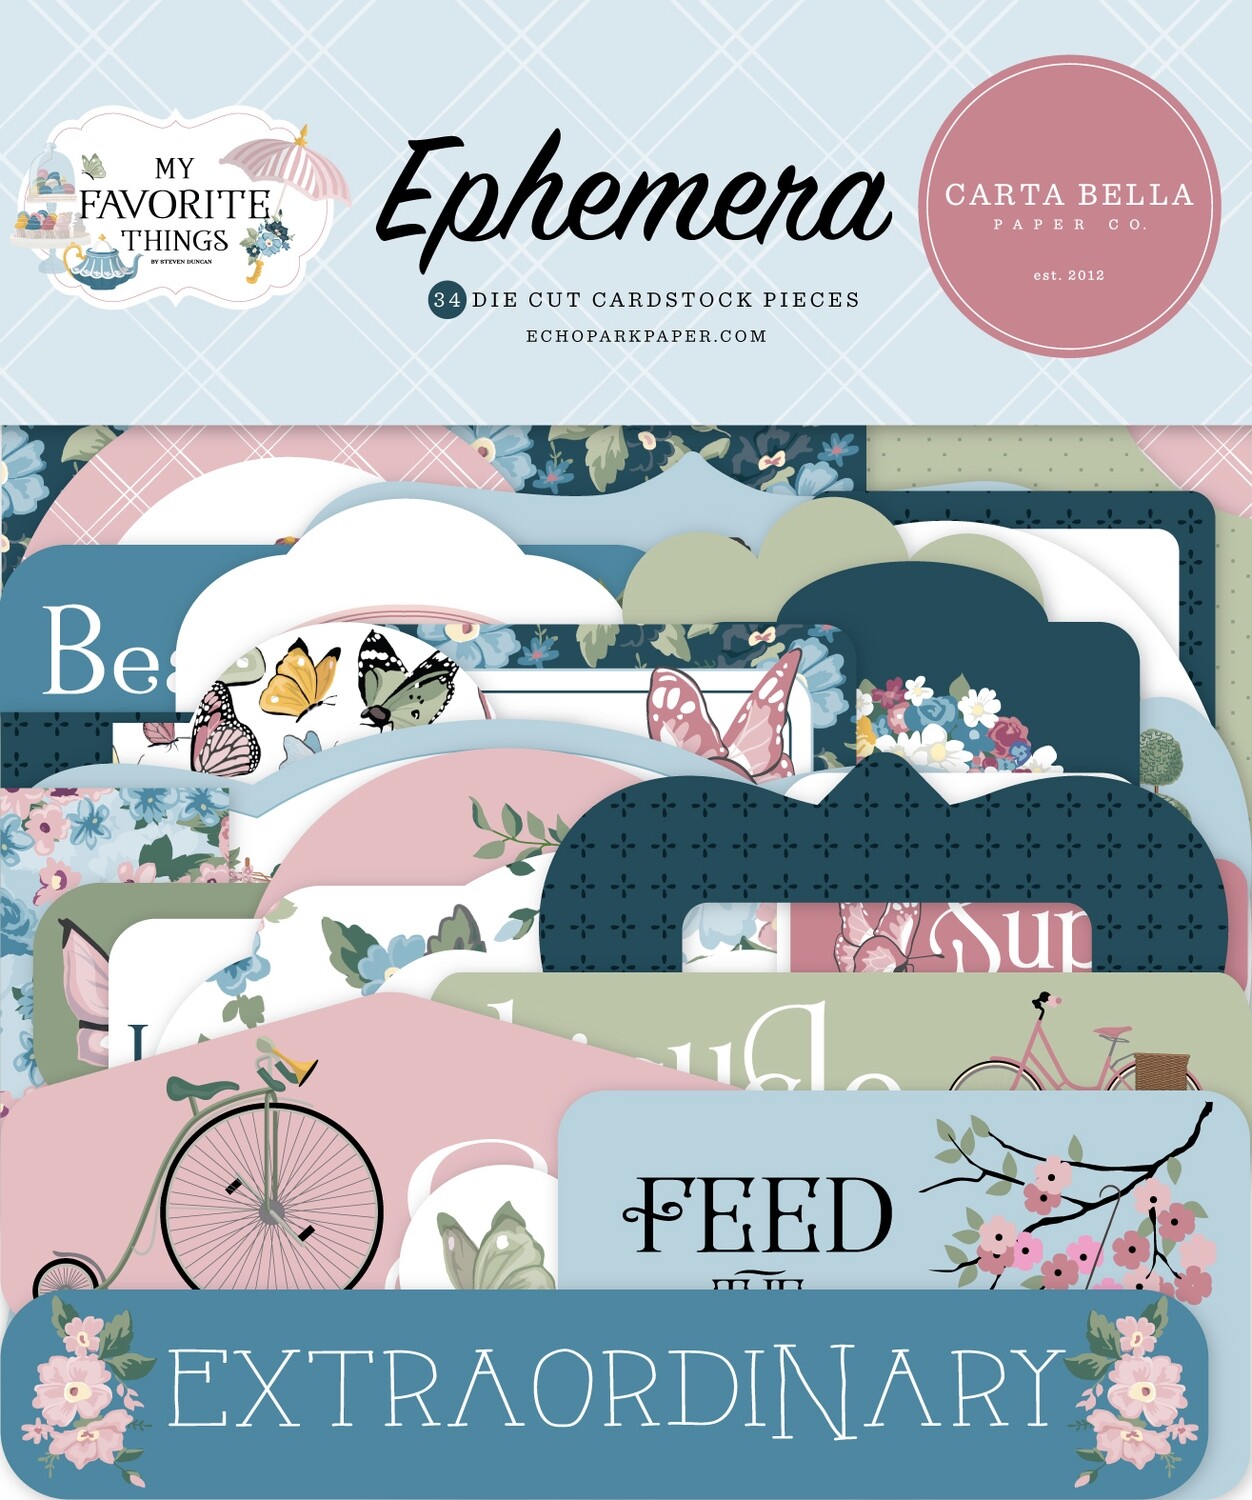 My Favorite Things Ephemera - Carta Bella Paper Co.